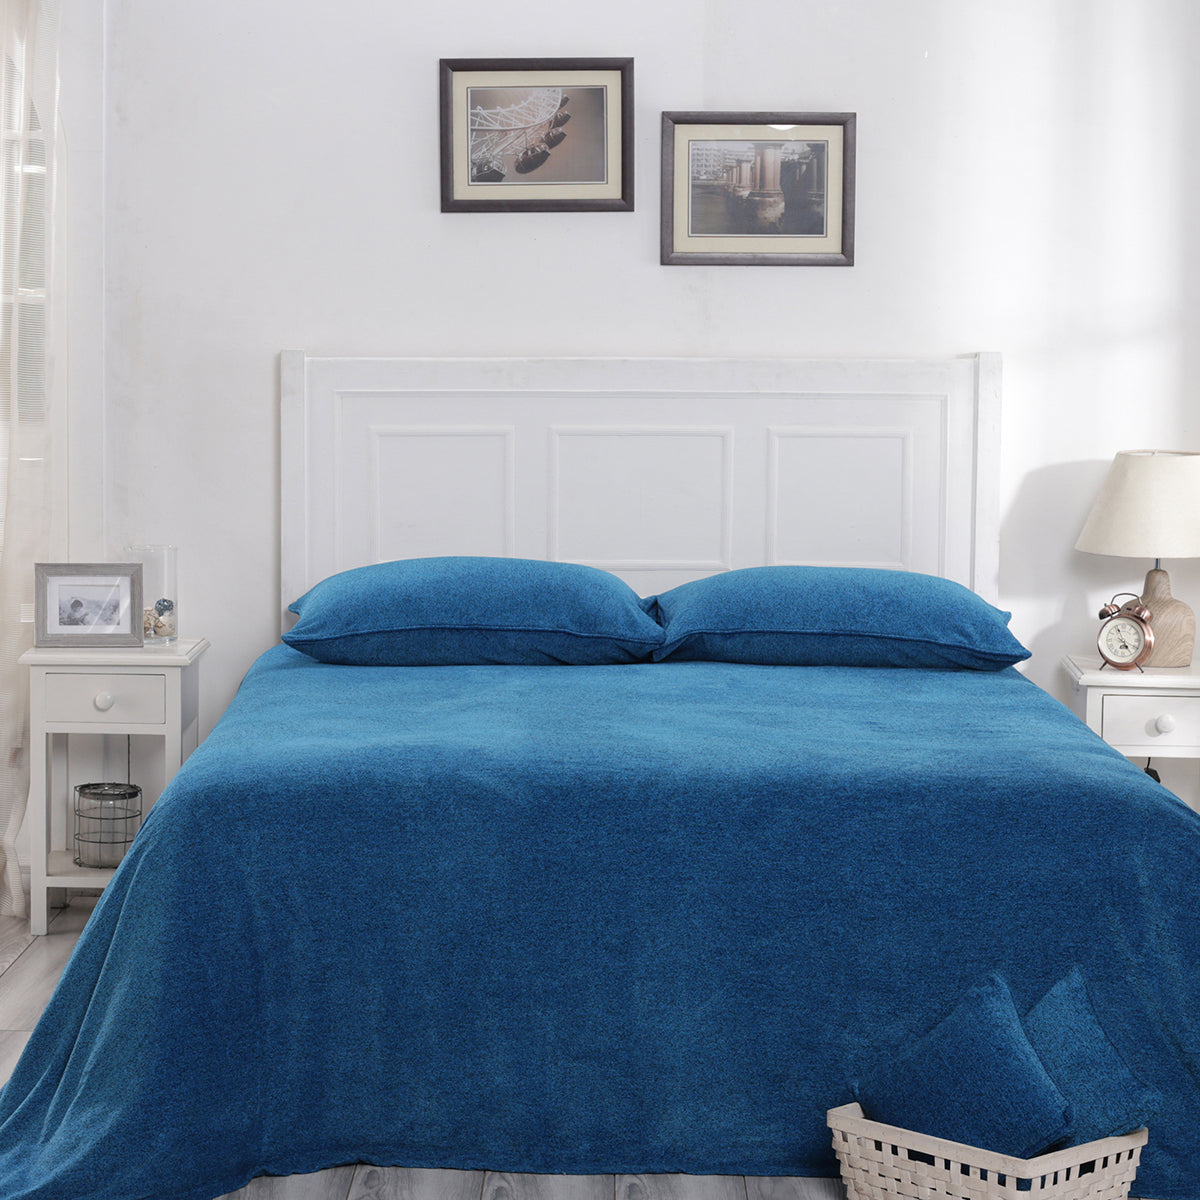 Charlotte Woven Reef Blue/ Black Bed Cover/Blanket